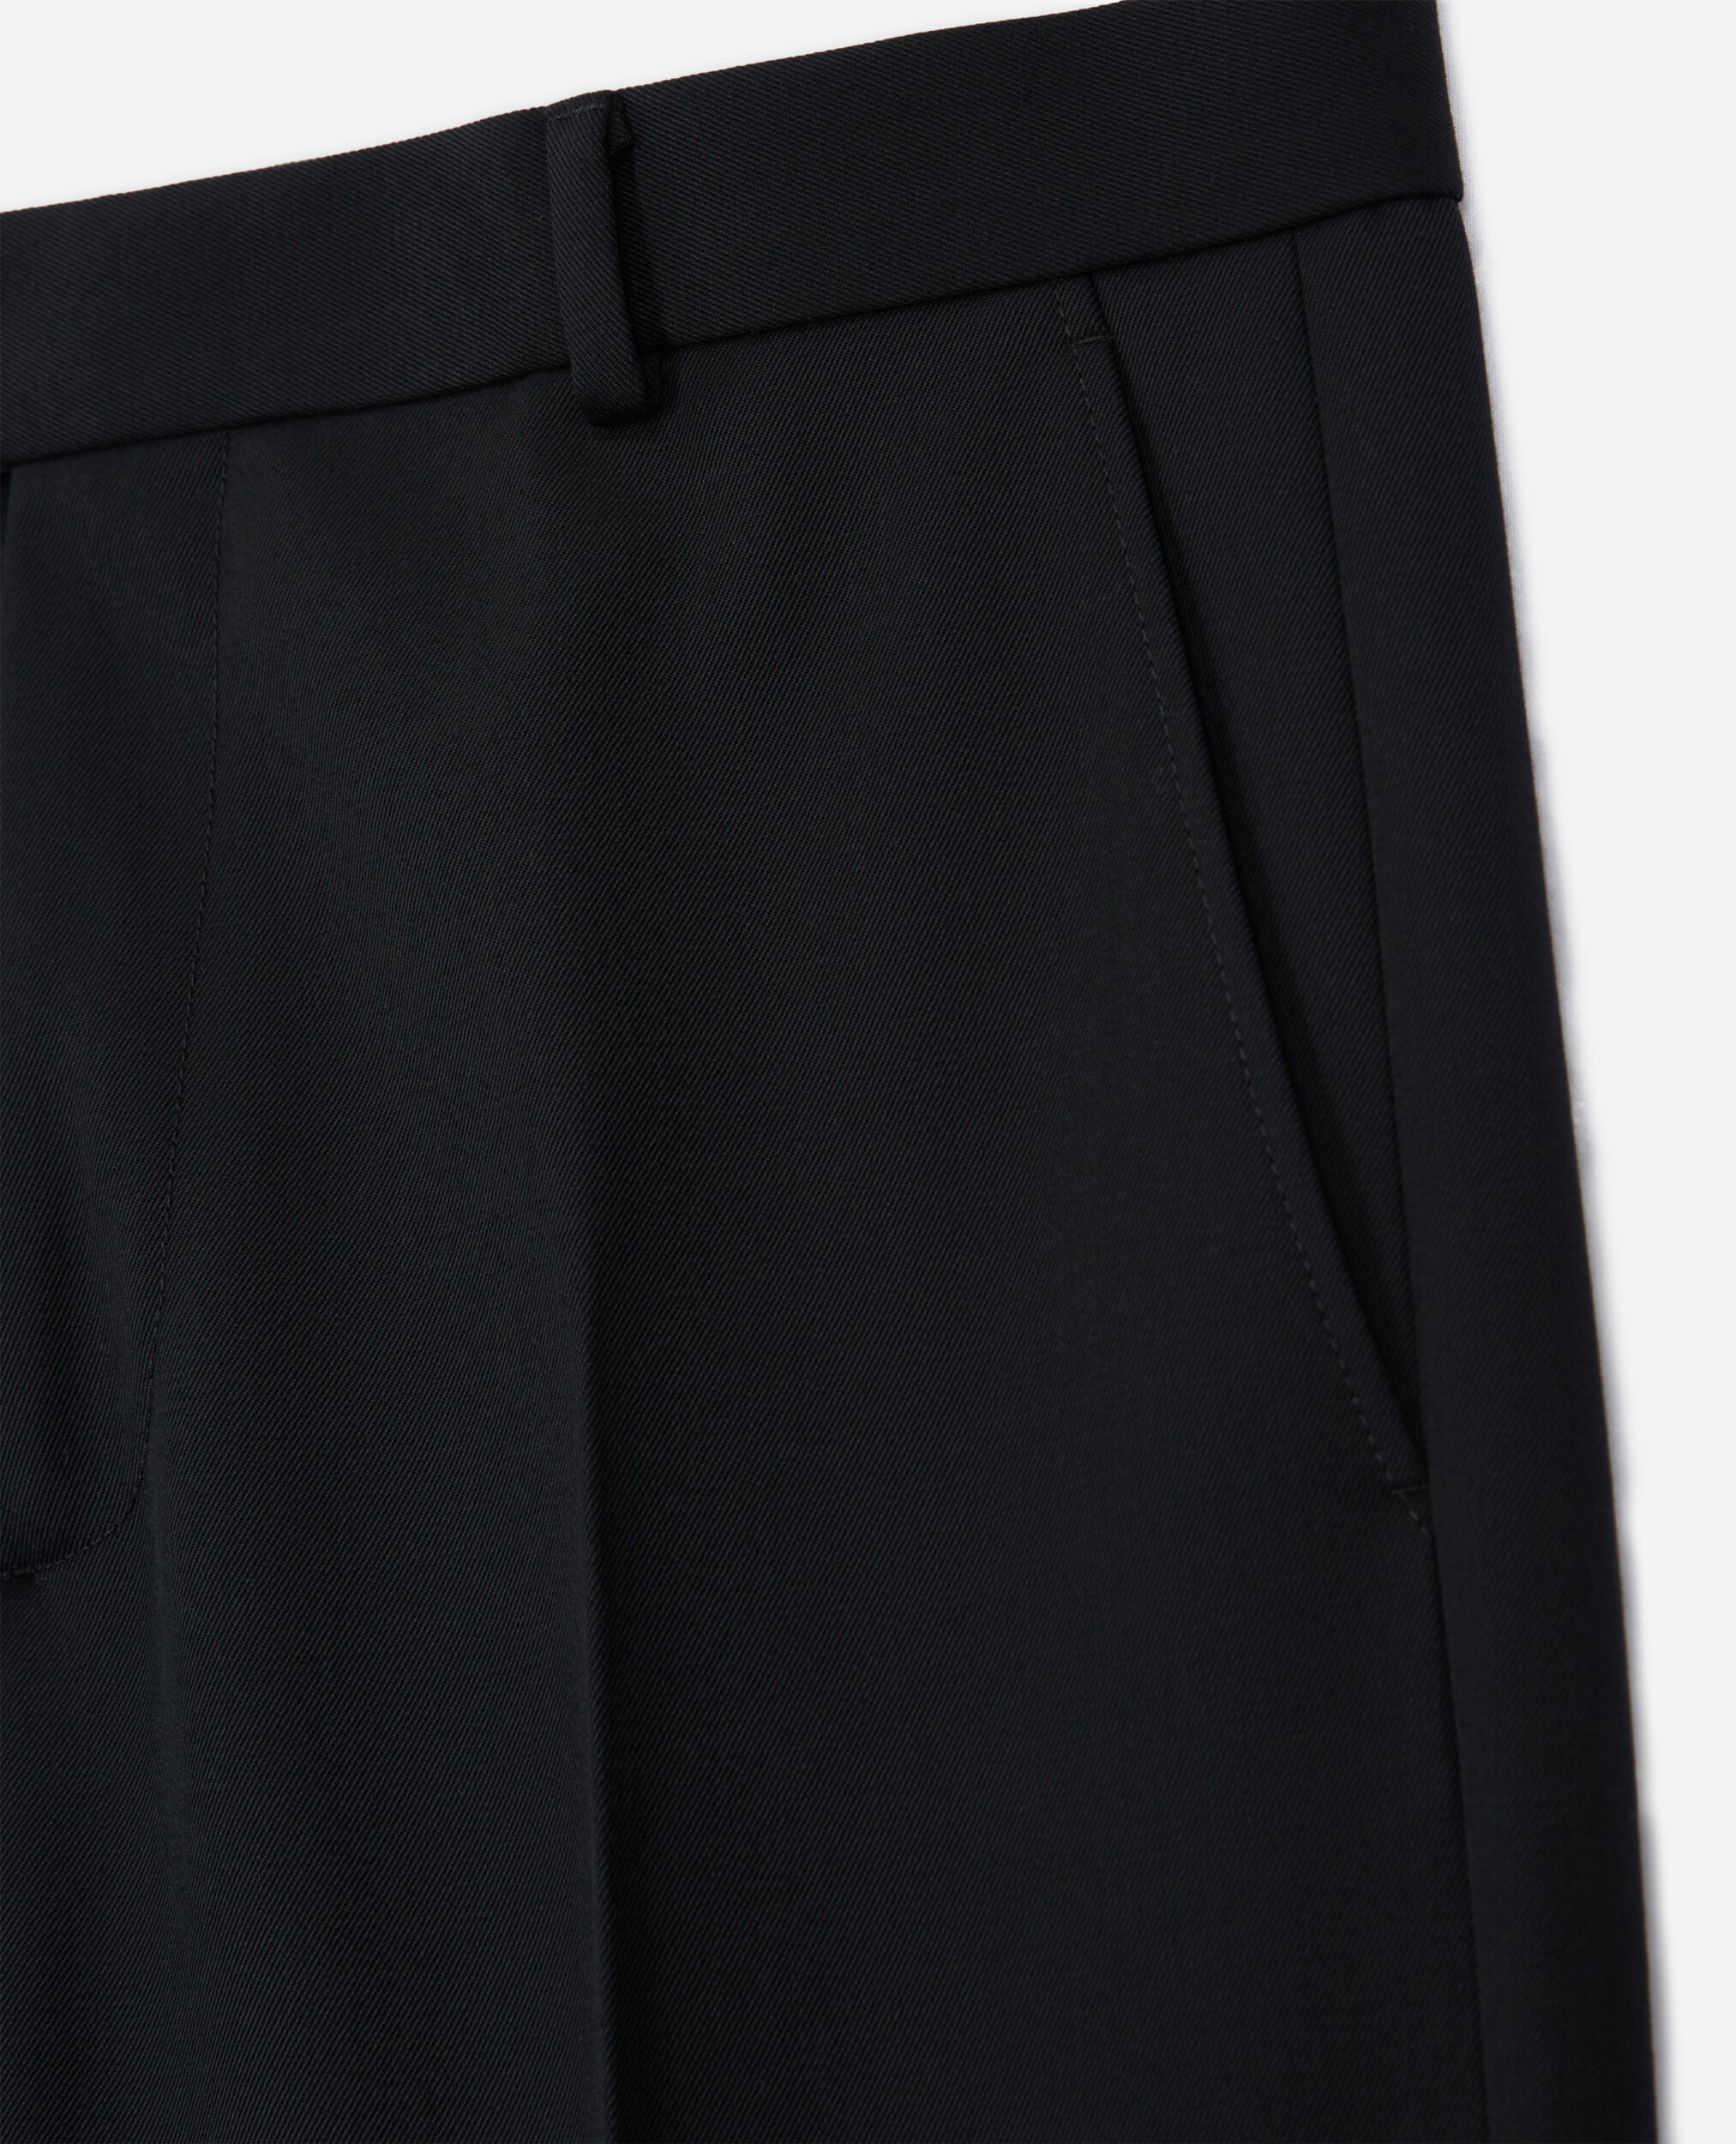 Pantalón lana evasé negro, BLACK, hi-res image number null